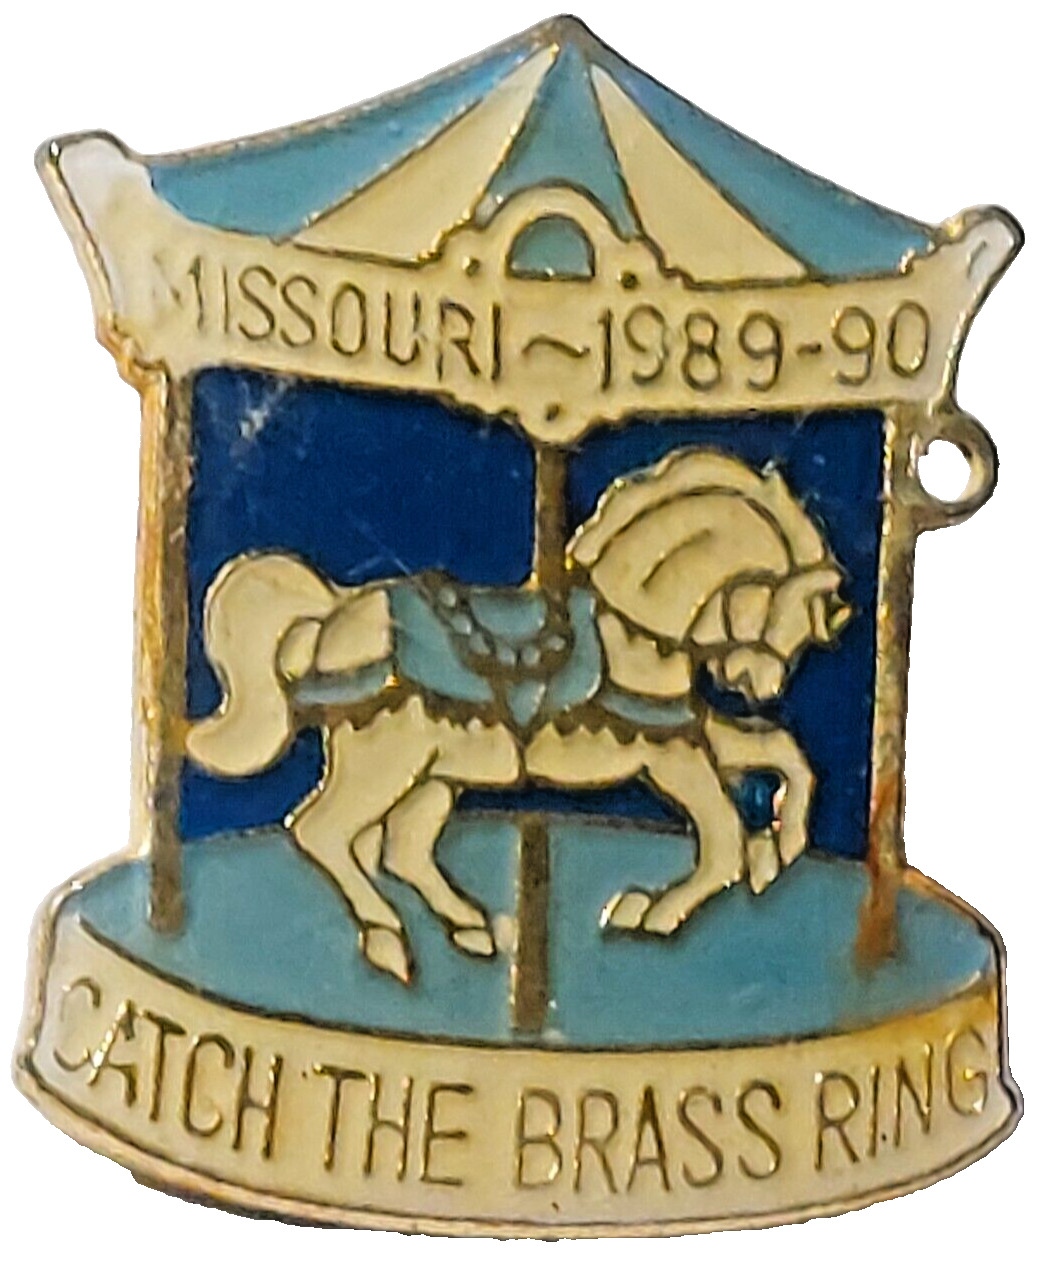 VFW Missouri 1989-1990 Catch The Brass Ring  Lapel Pin